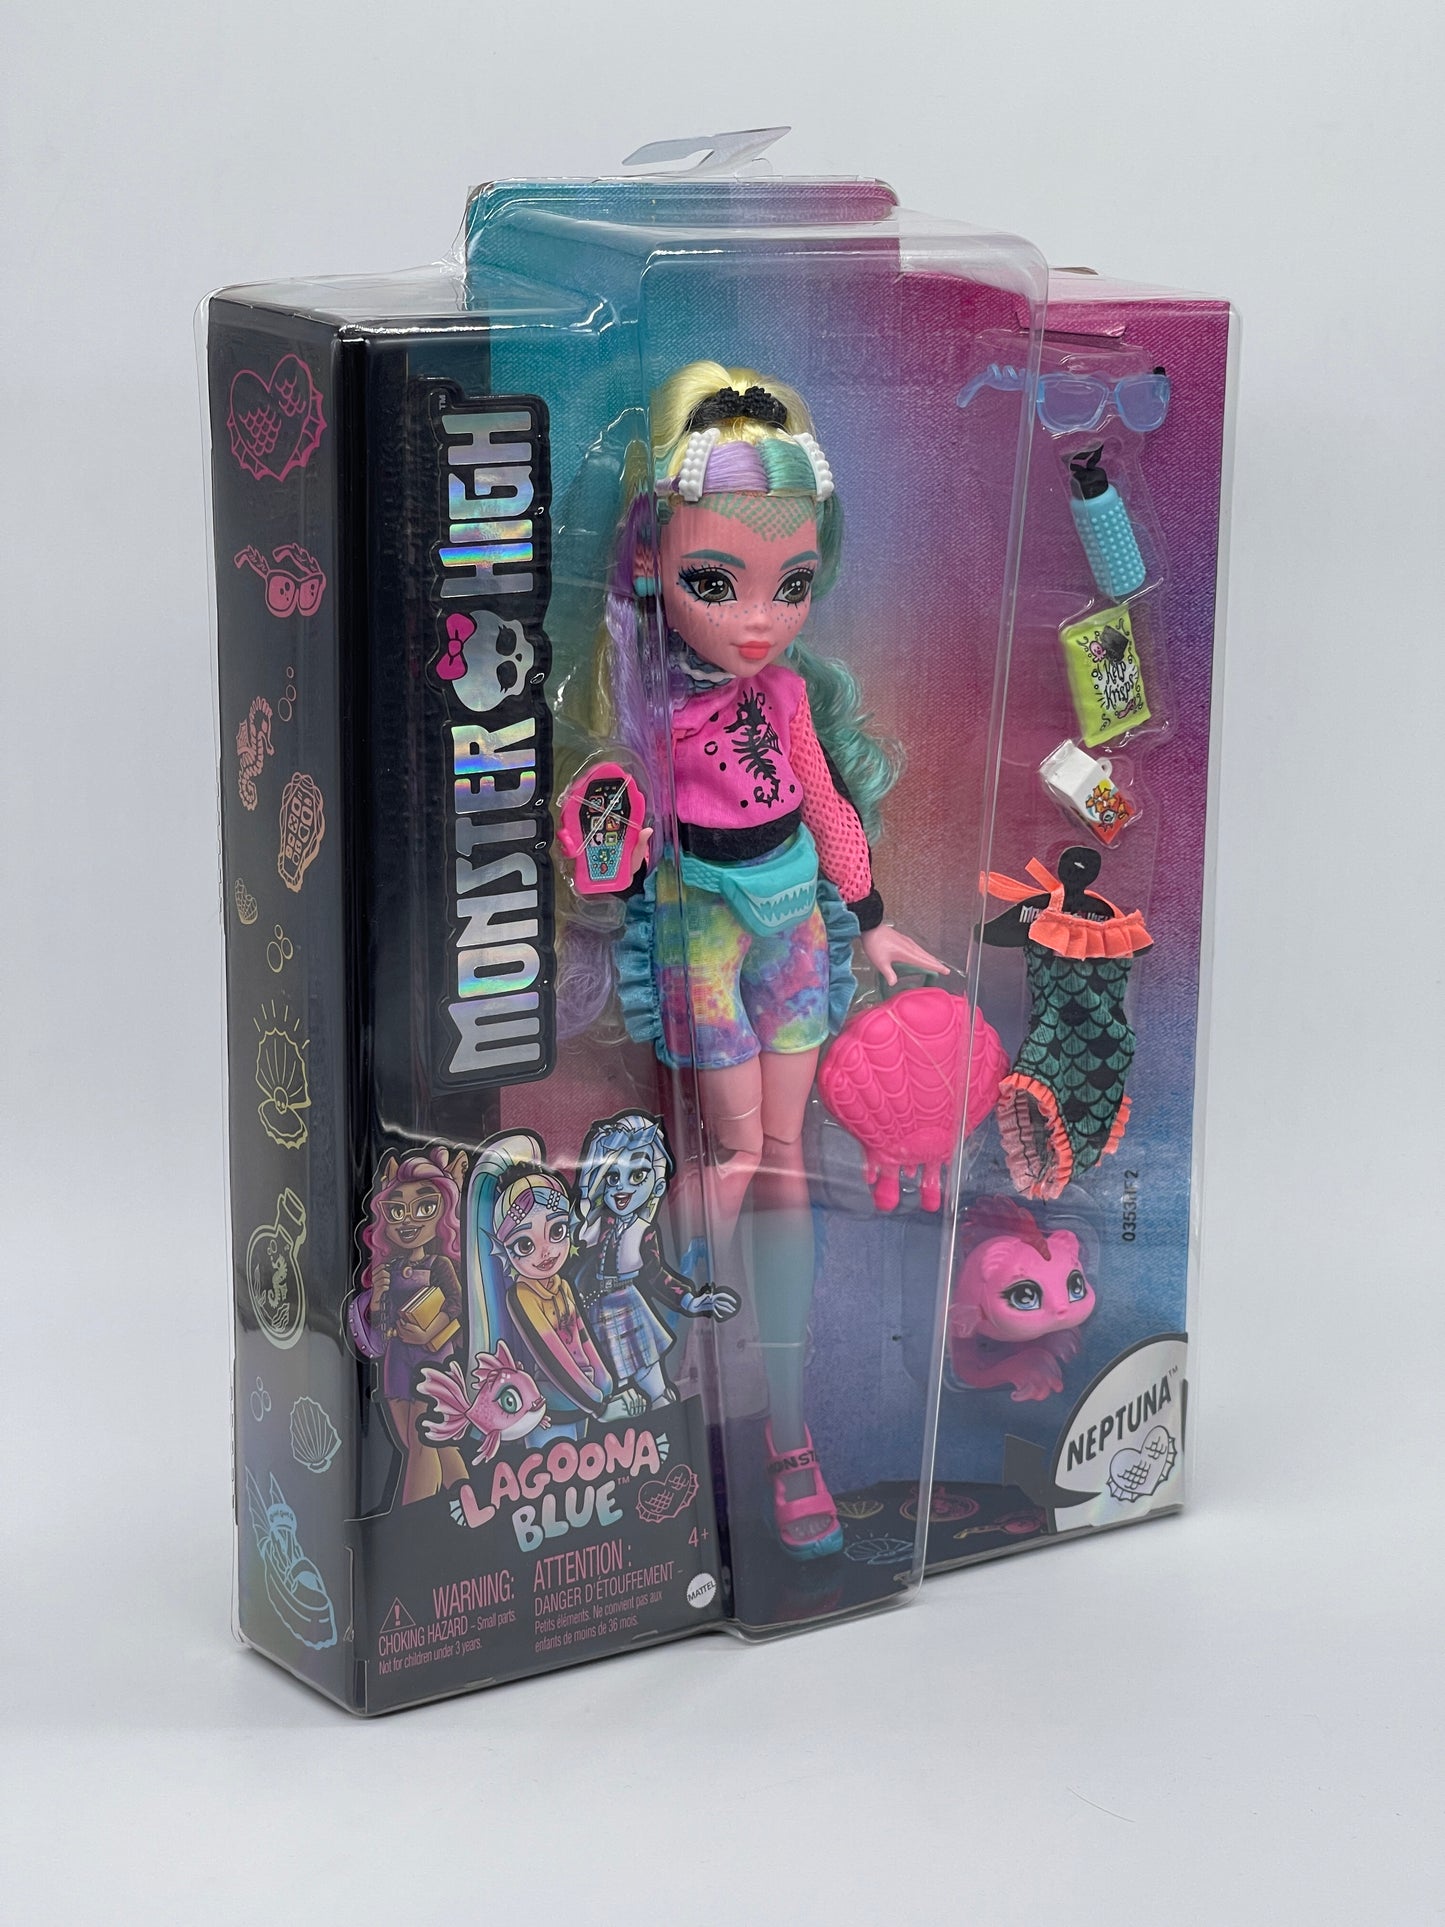 Monster High "Lagoona Blue mit Neptuna" Reboot, Mattel (2022)